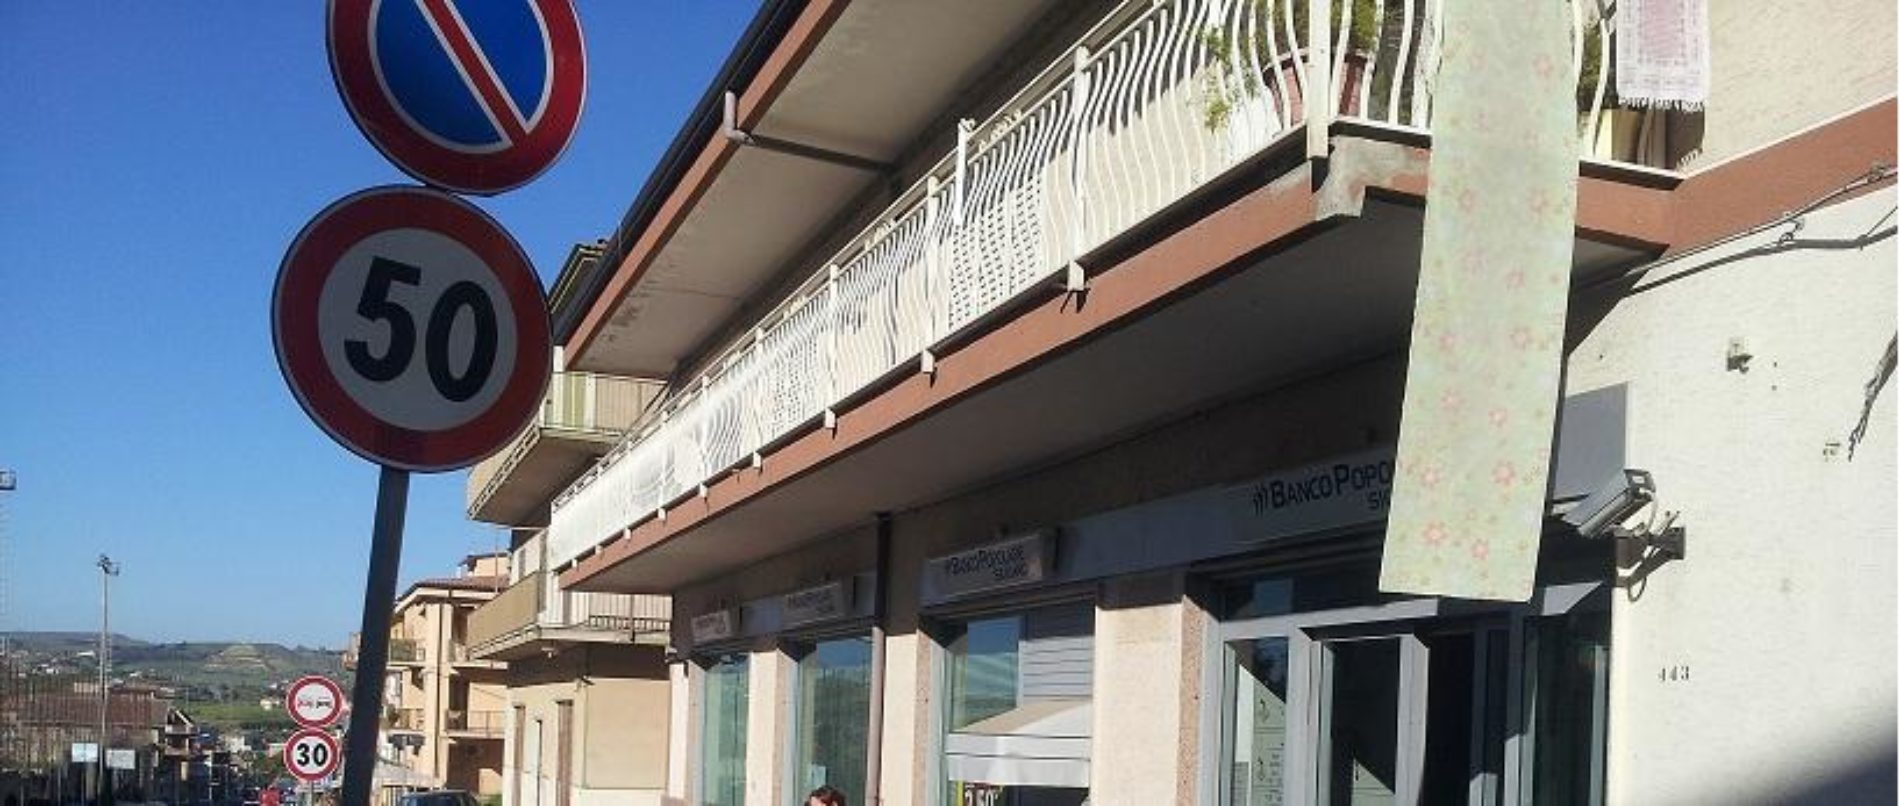 La rapina a Barrafranca, retroscena umanitario, rapinatrice di banca per bisogno